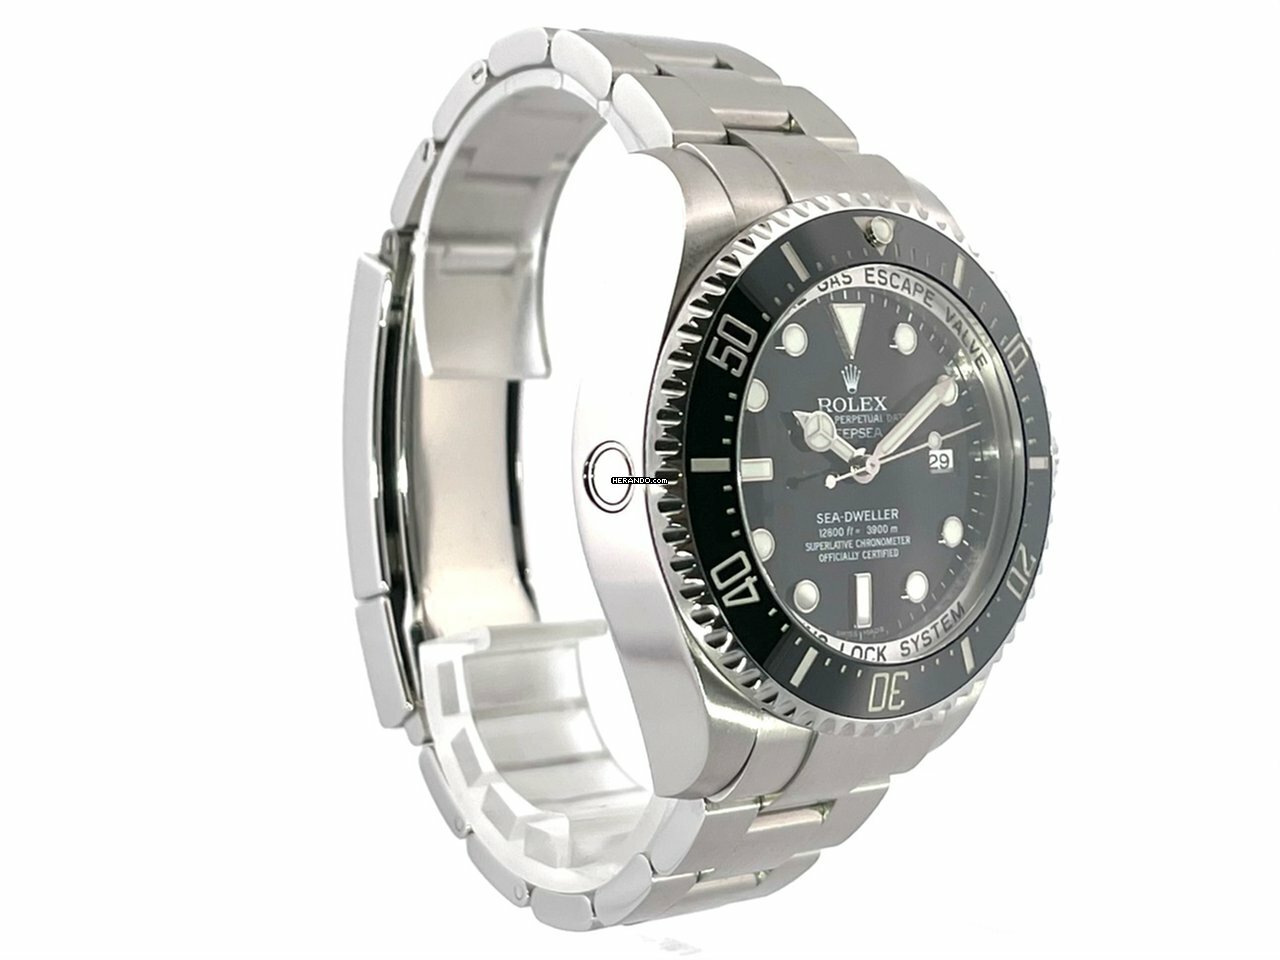 watches-308254-26035112-jp2eo9nbyu03imwavbp0633c-ExtraLarge.jpg